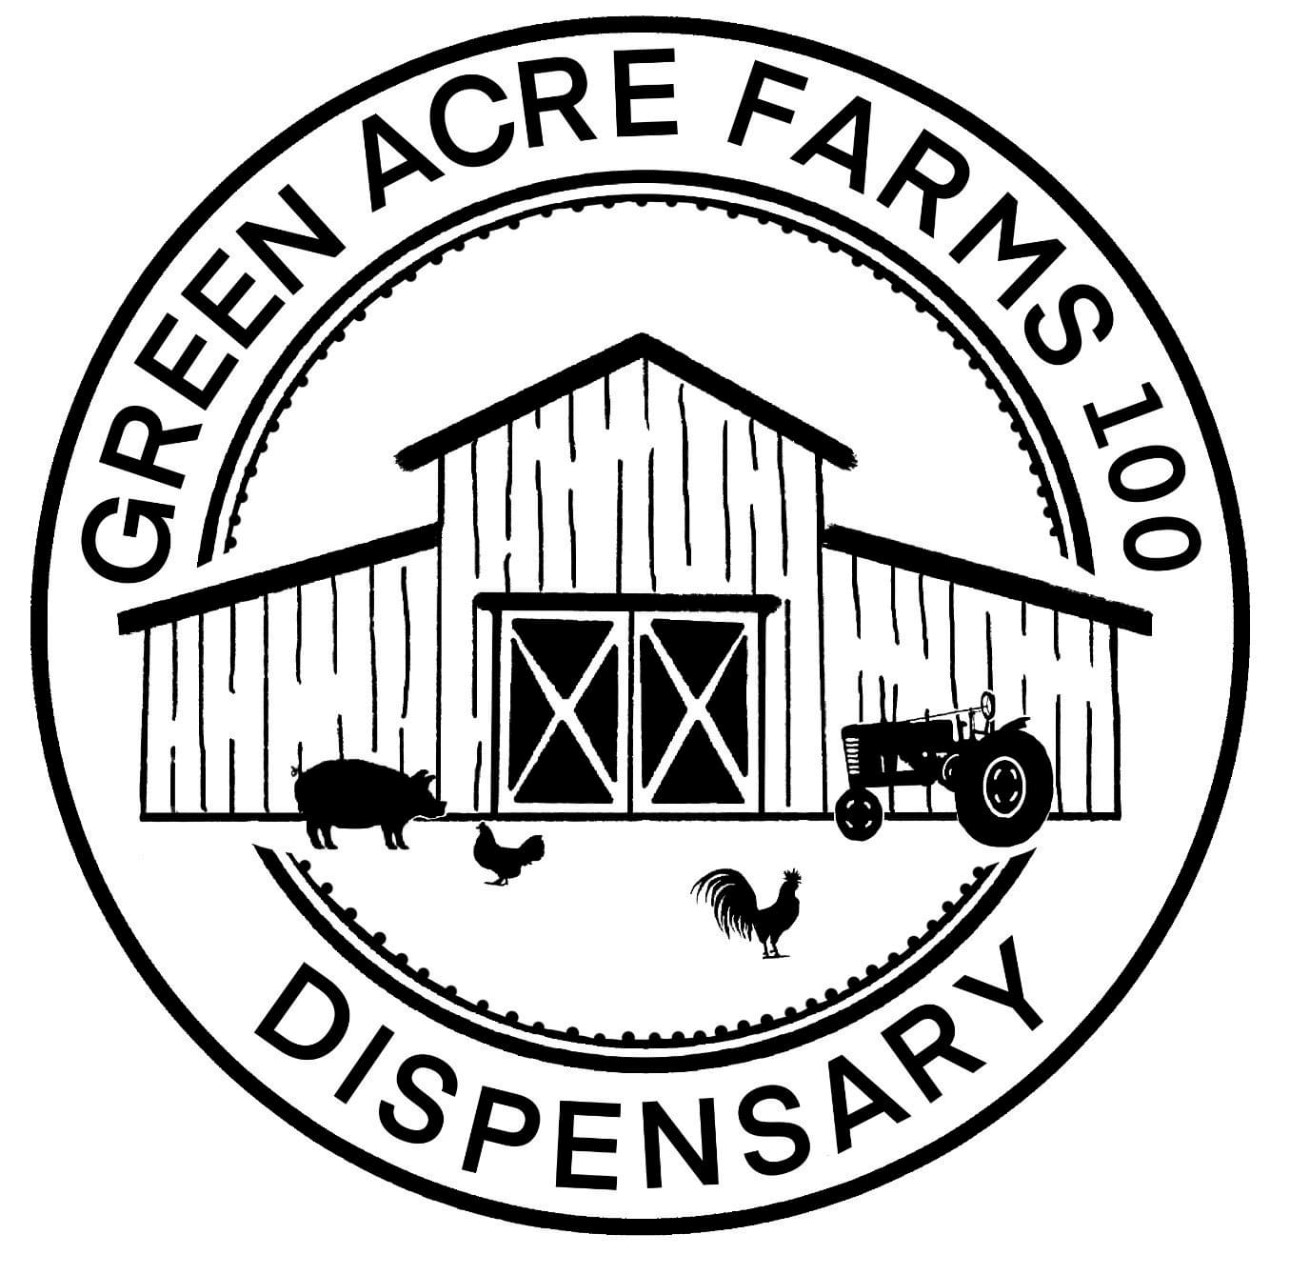 Green Acre Farms 100, LLC